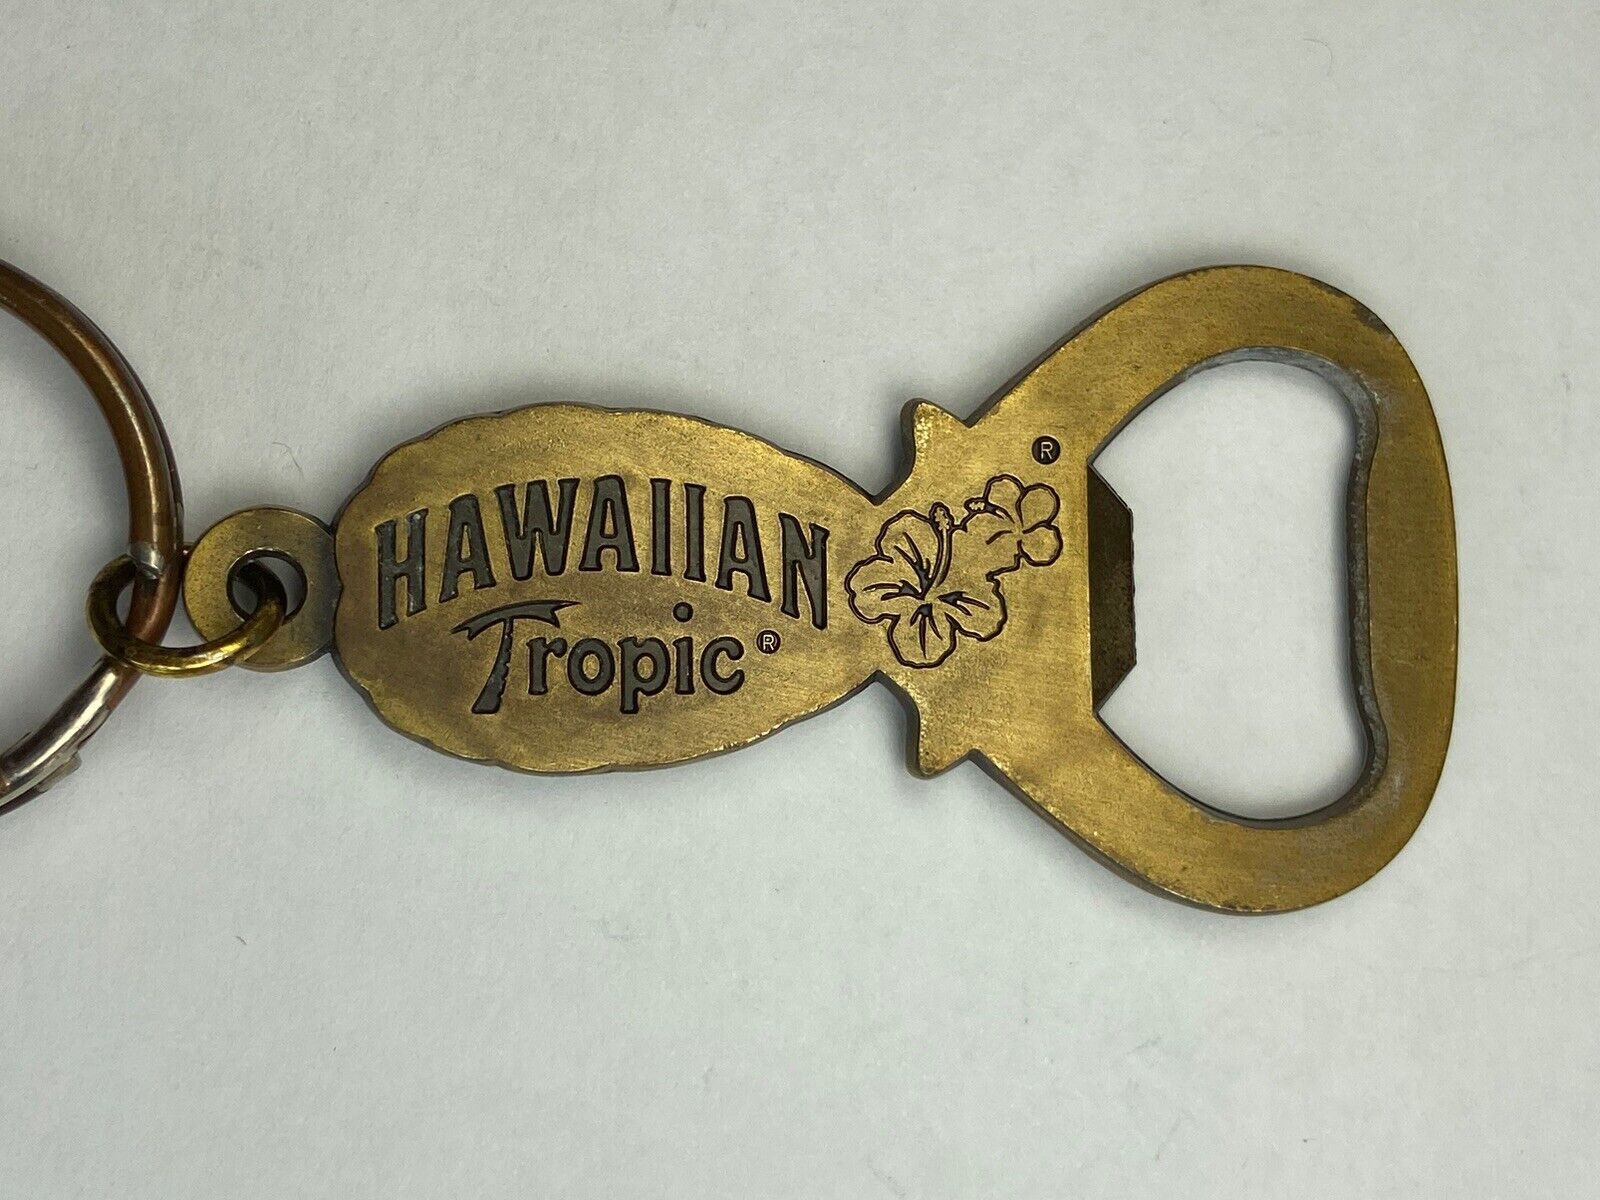 Hawaiian Tropic Pineapple Shaped Metal Bottle Opener / Keychain Rare